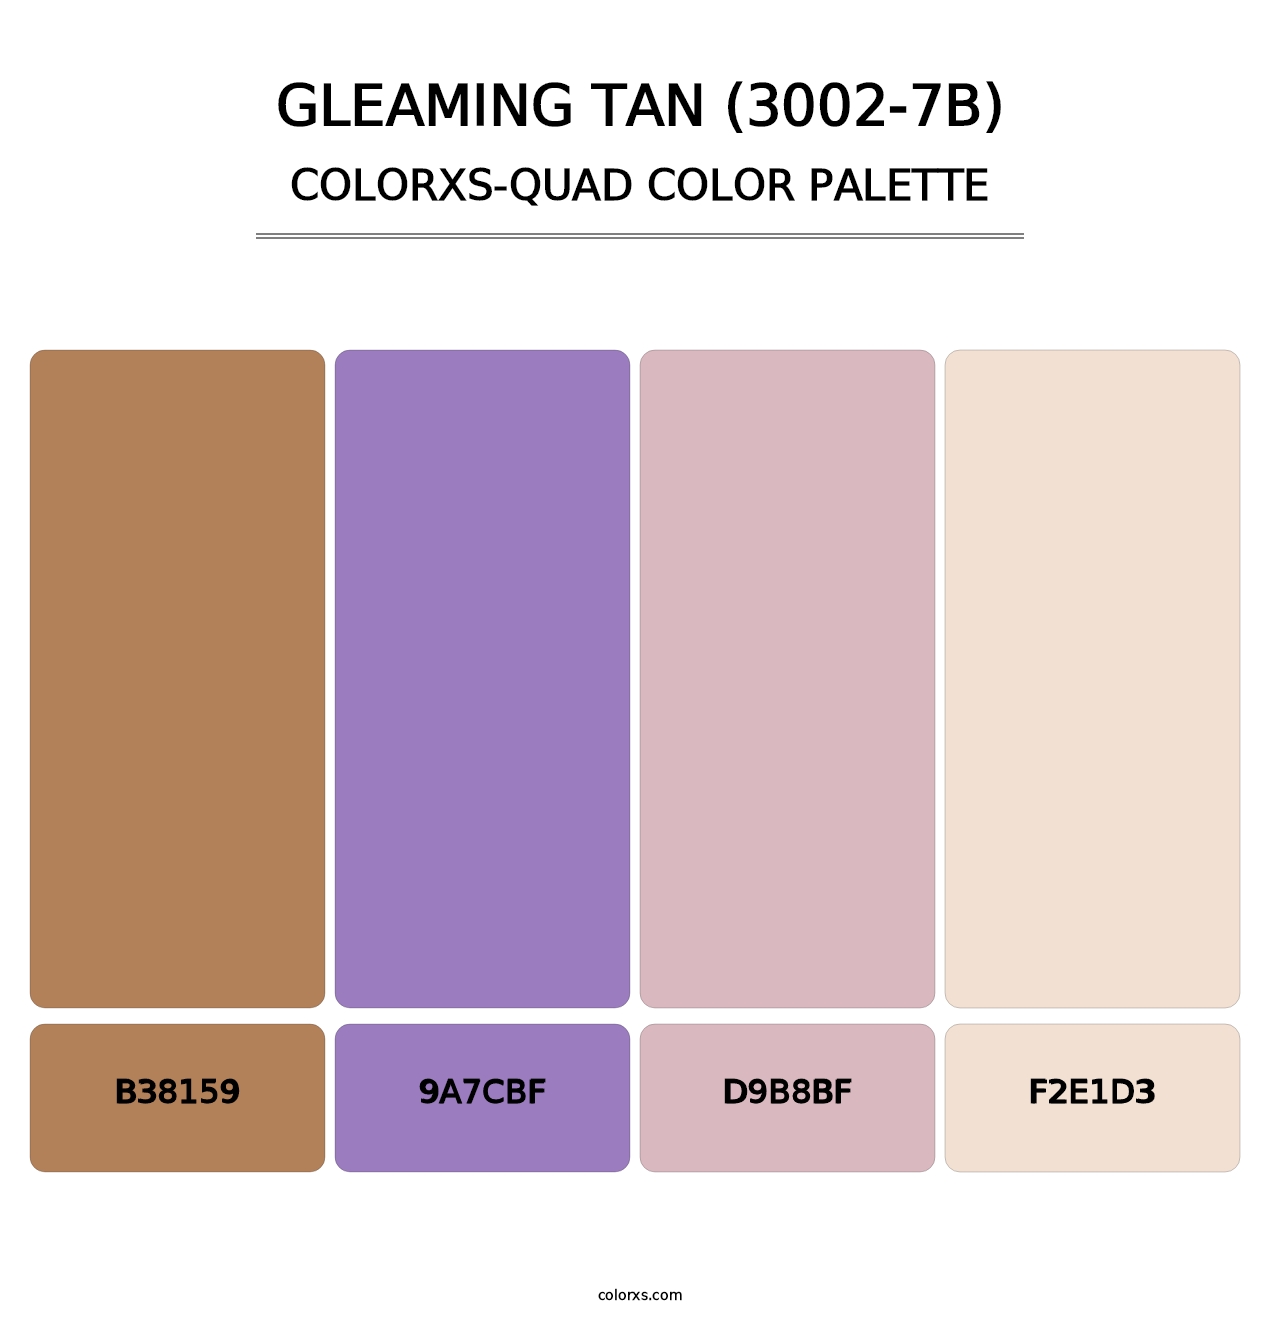 Gleaming Tan (3002-7B) - Colorxs Quad Palette